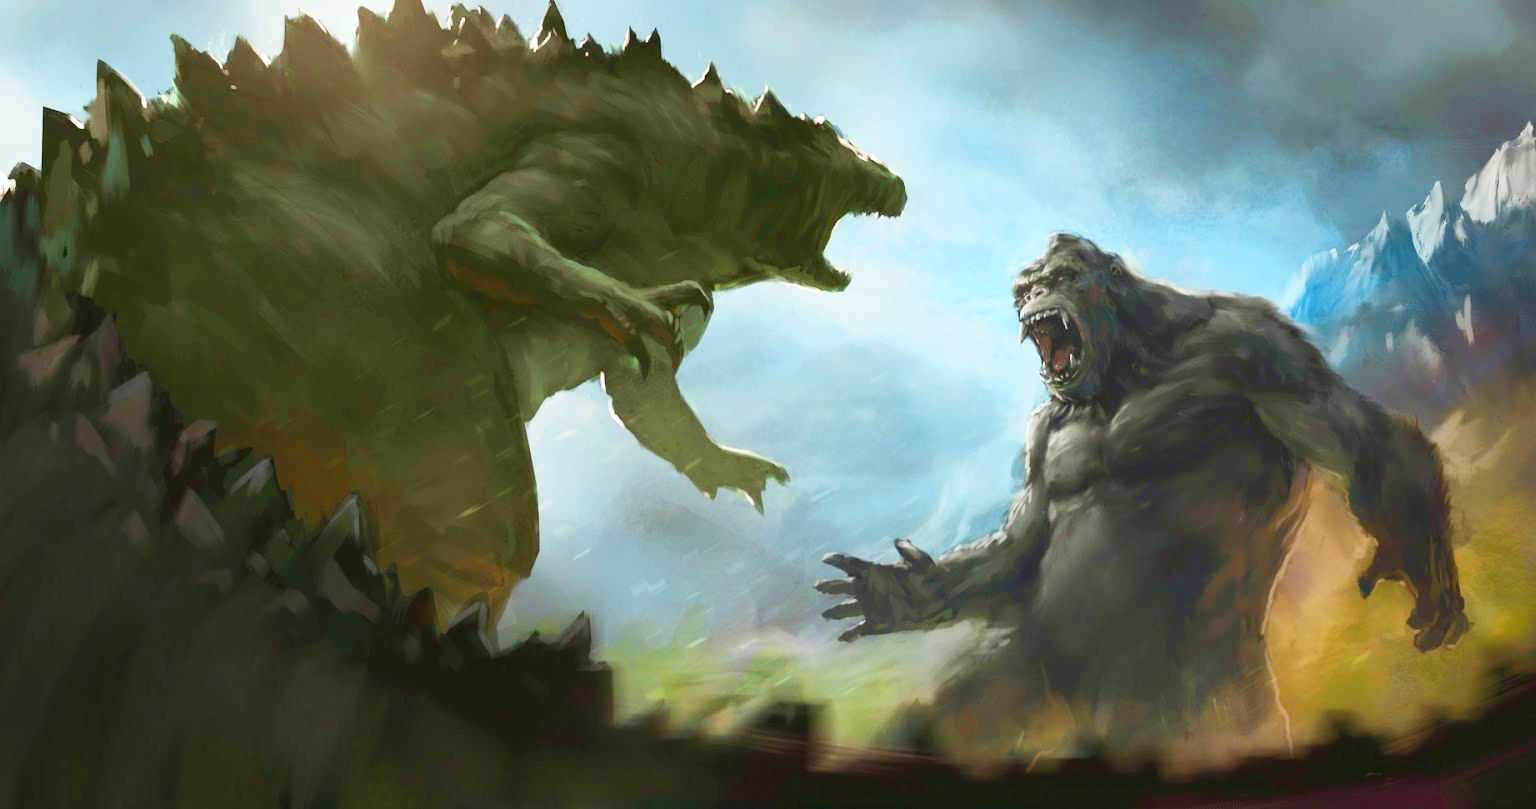 Godzilla Vs. Kong Gets Rated PG-13, Promising Plenty of Violence and Destruction